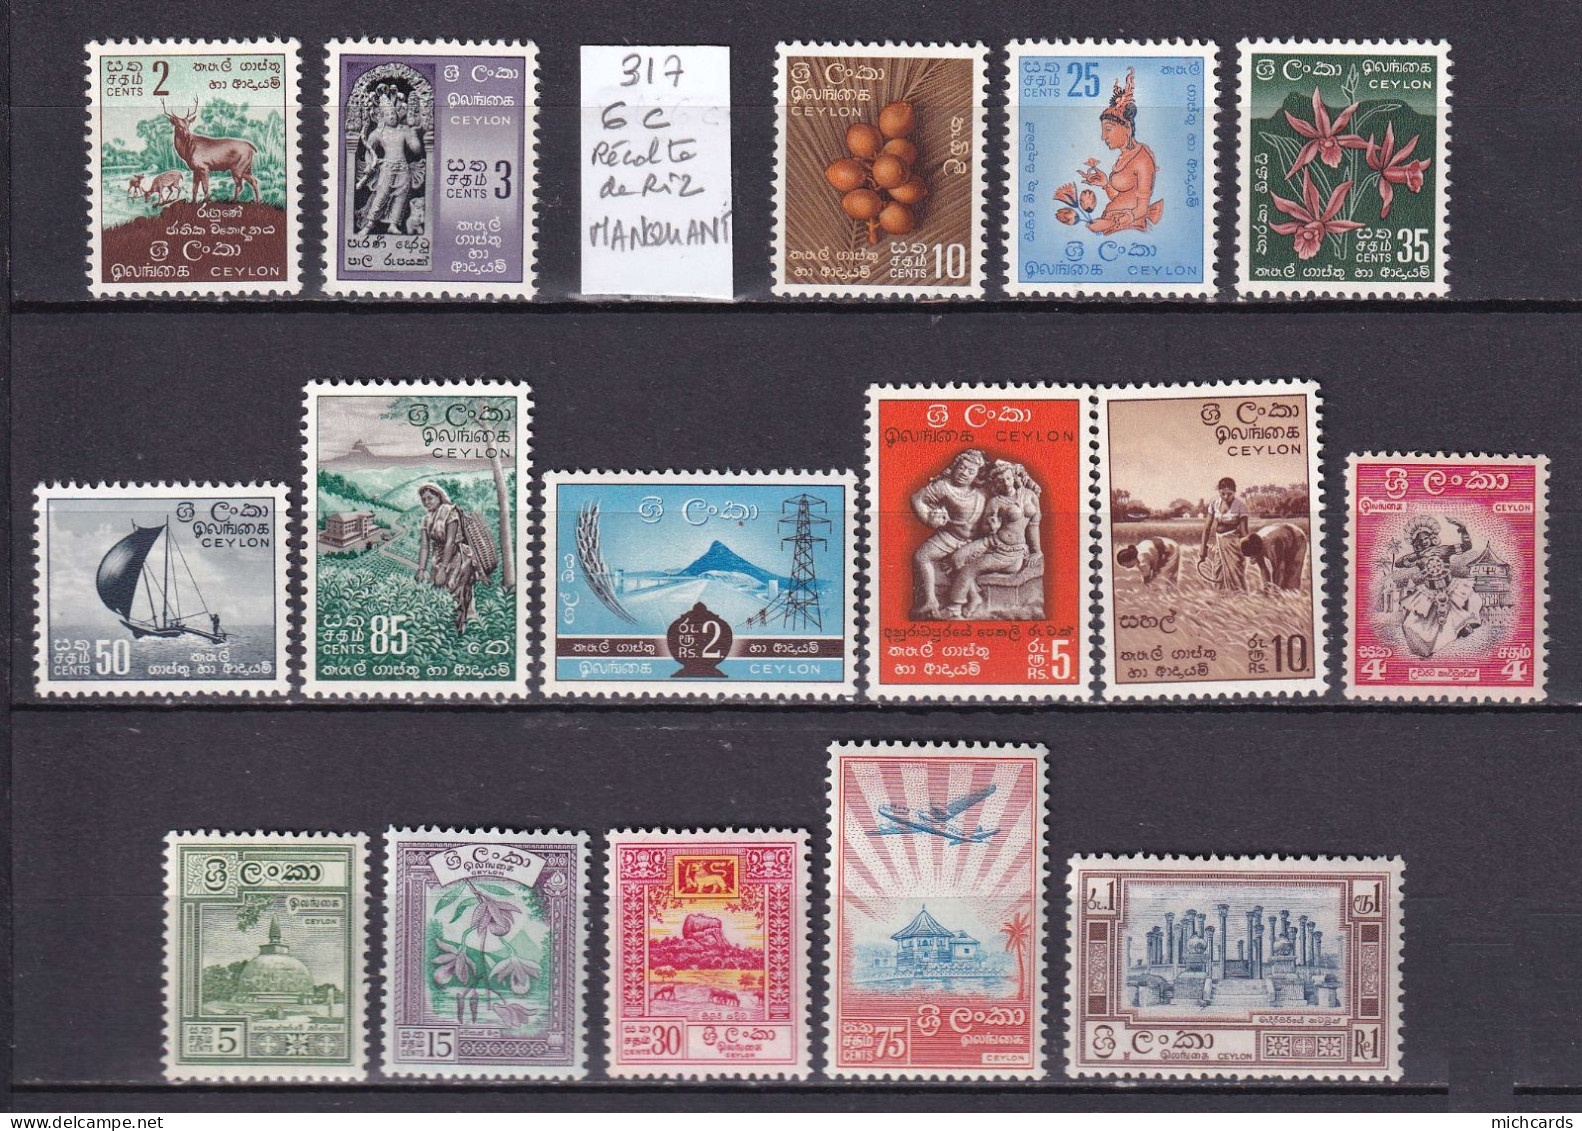 264 - CEYLAN 1958/59 - Y&T 315/28 Manque Le 6c (317) - Serie Courante - Neuf **(MNH) Sans Charniere - Sri Lanka (Ceylon) (1948-...)